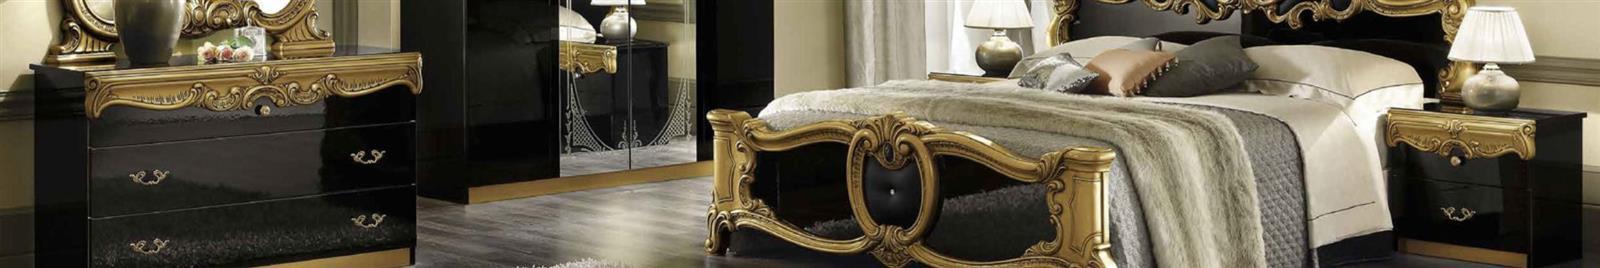 Barocco Black & Gold Range - Italian Bedroom Furniture